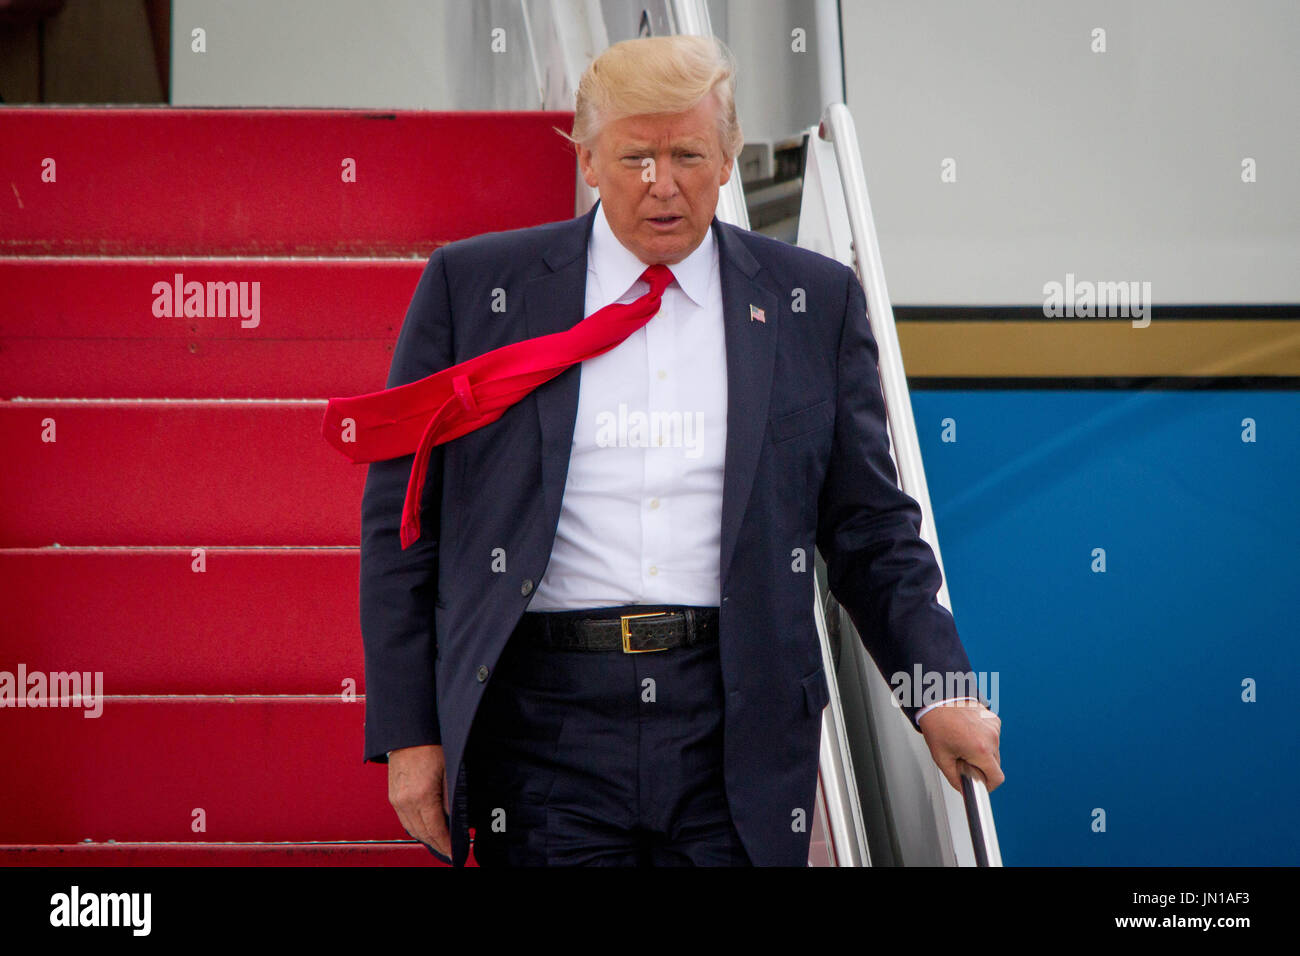 Ronkonkoma, NY, USA. 28. Juli 2017. Präsident Donald Trump landet Air Force One in Ronkonkoma, NY, Freitag, 28. Juli 2017. Bildnachweis: Michael Candelori/Alamy Live-Nachrichten Stockfoto